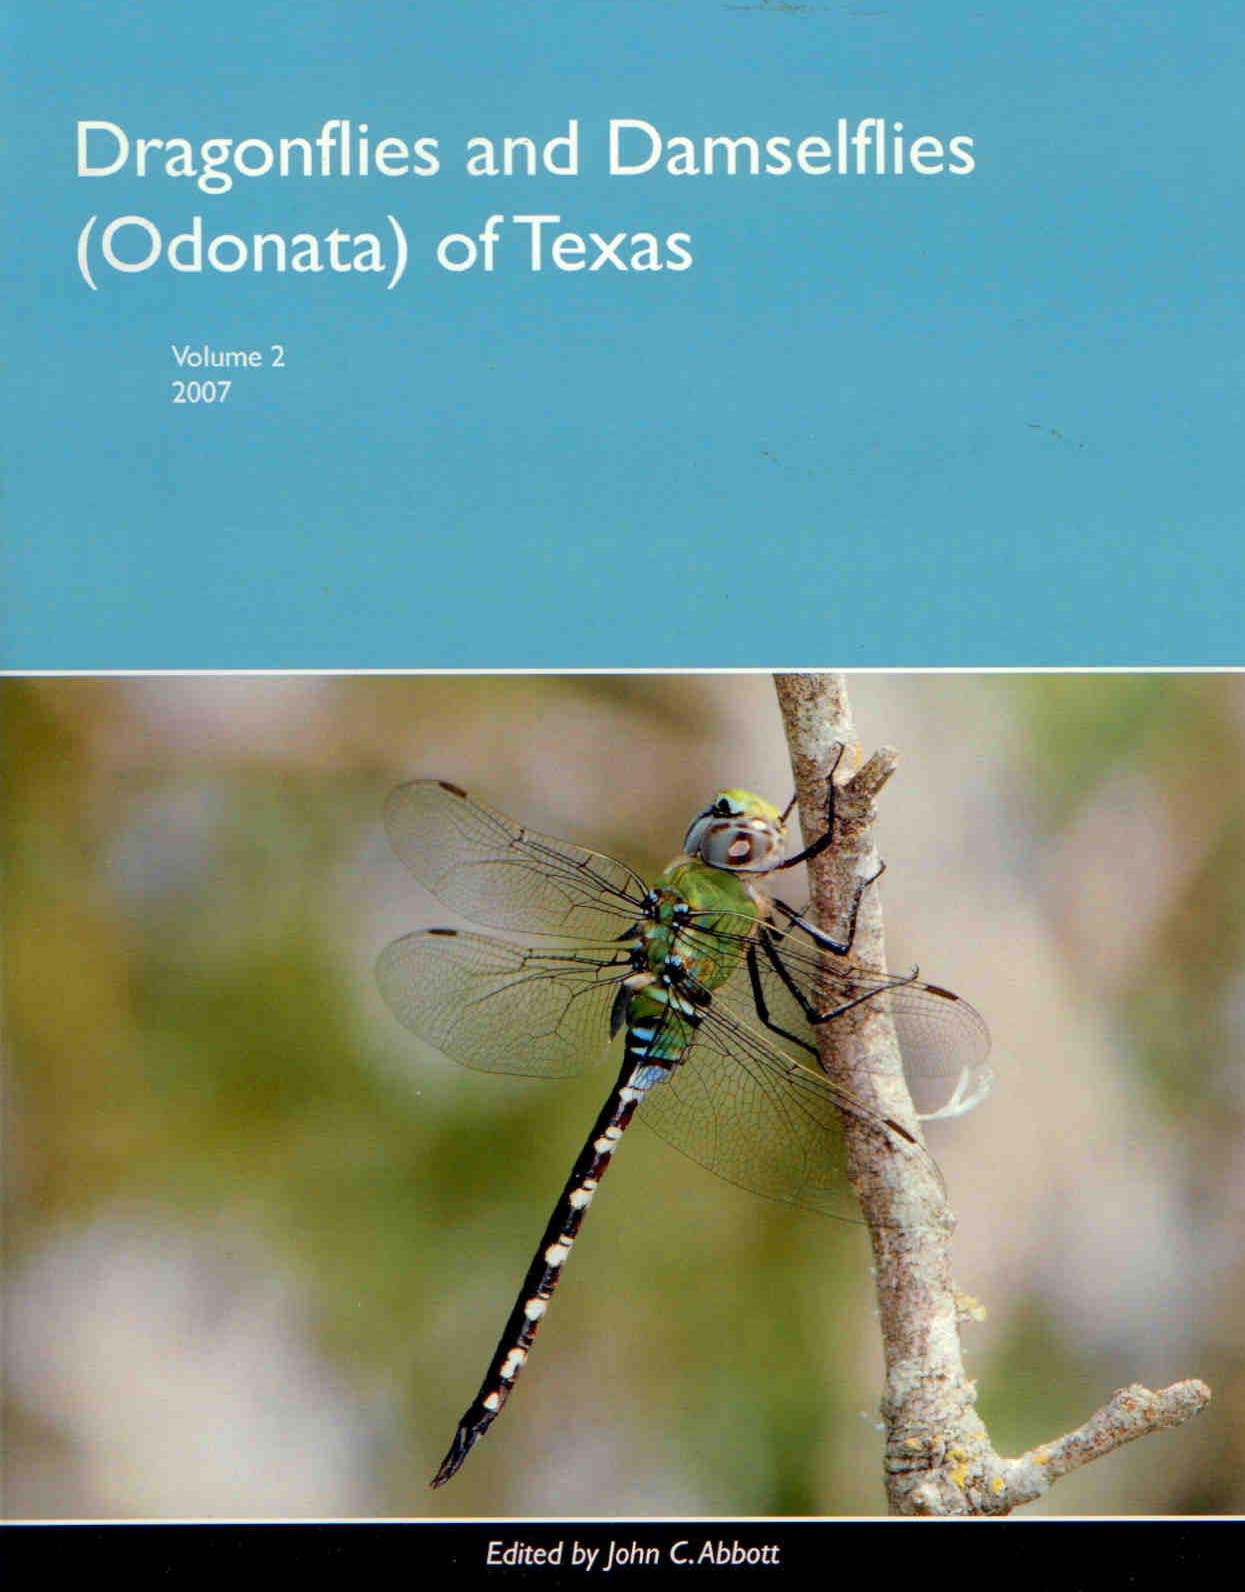 Abbott, J.C. - Dragonflies and Damselflies (Odonata) of Texas. Vol. 2